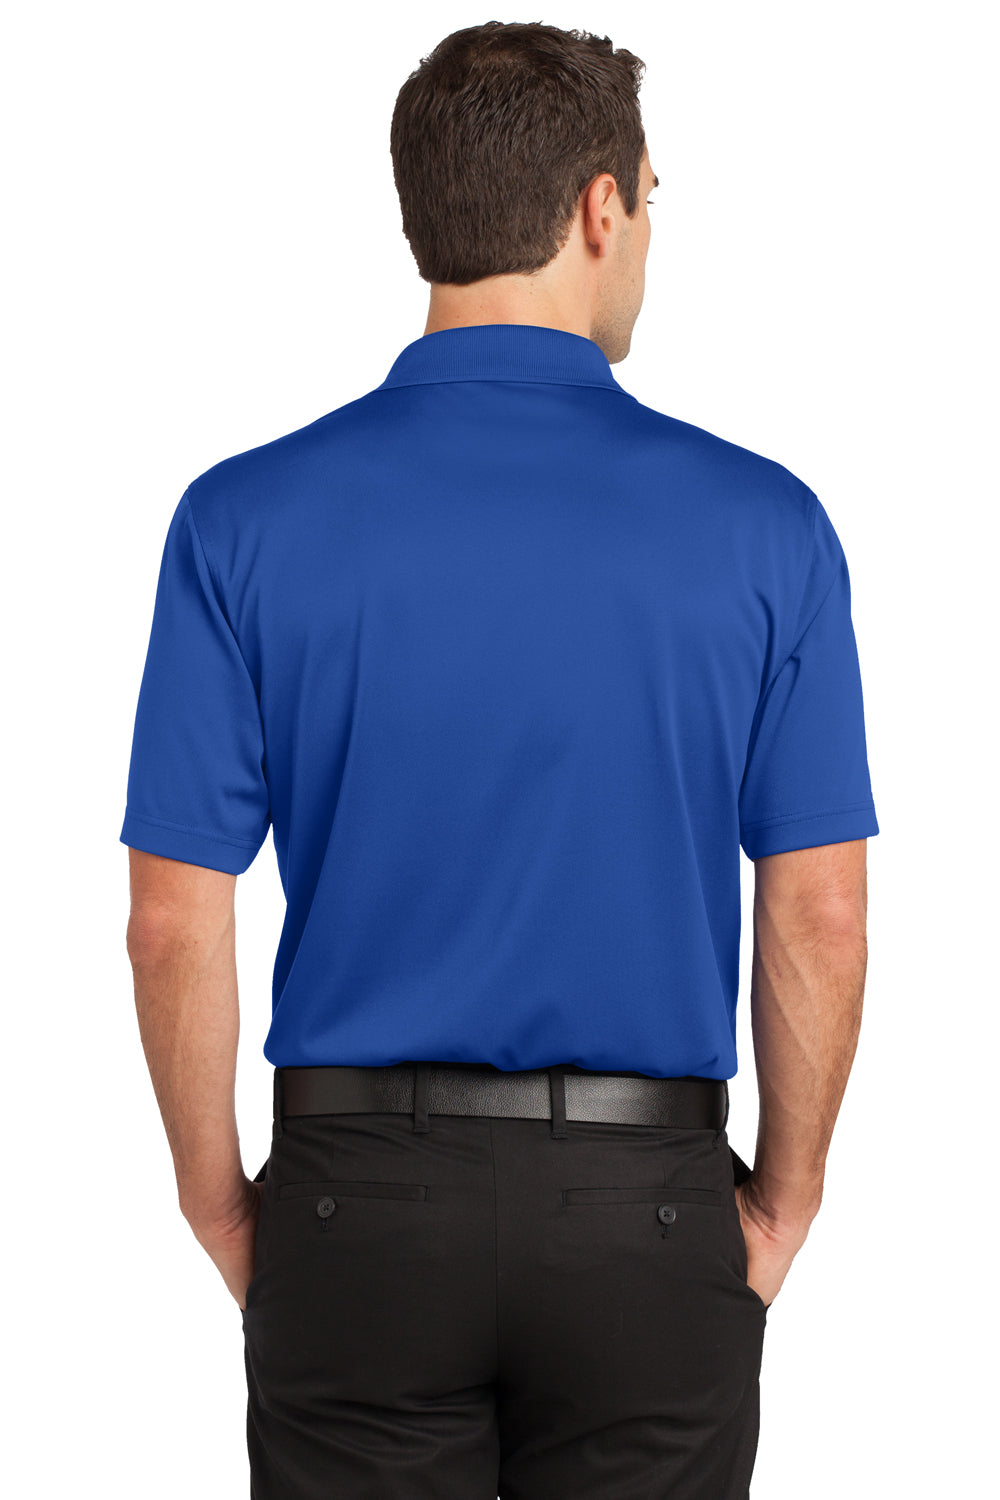 CornerStone CS412P Mens Select Moisture Wicking Short Sleeve Polo Shirt w/ Pocket Royal Blue Back